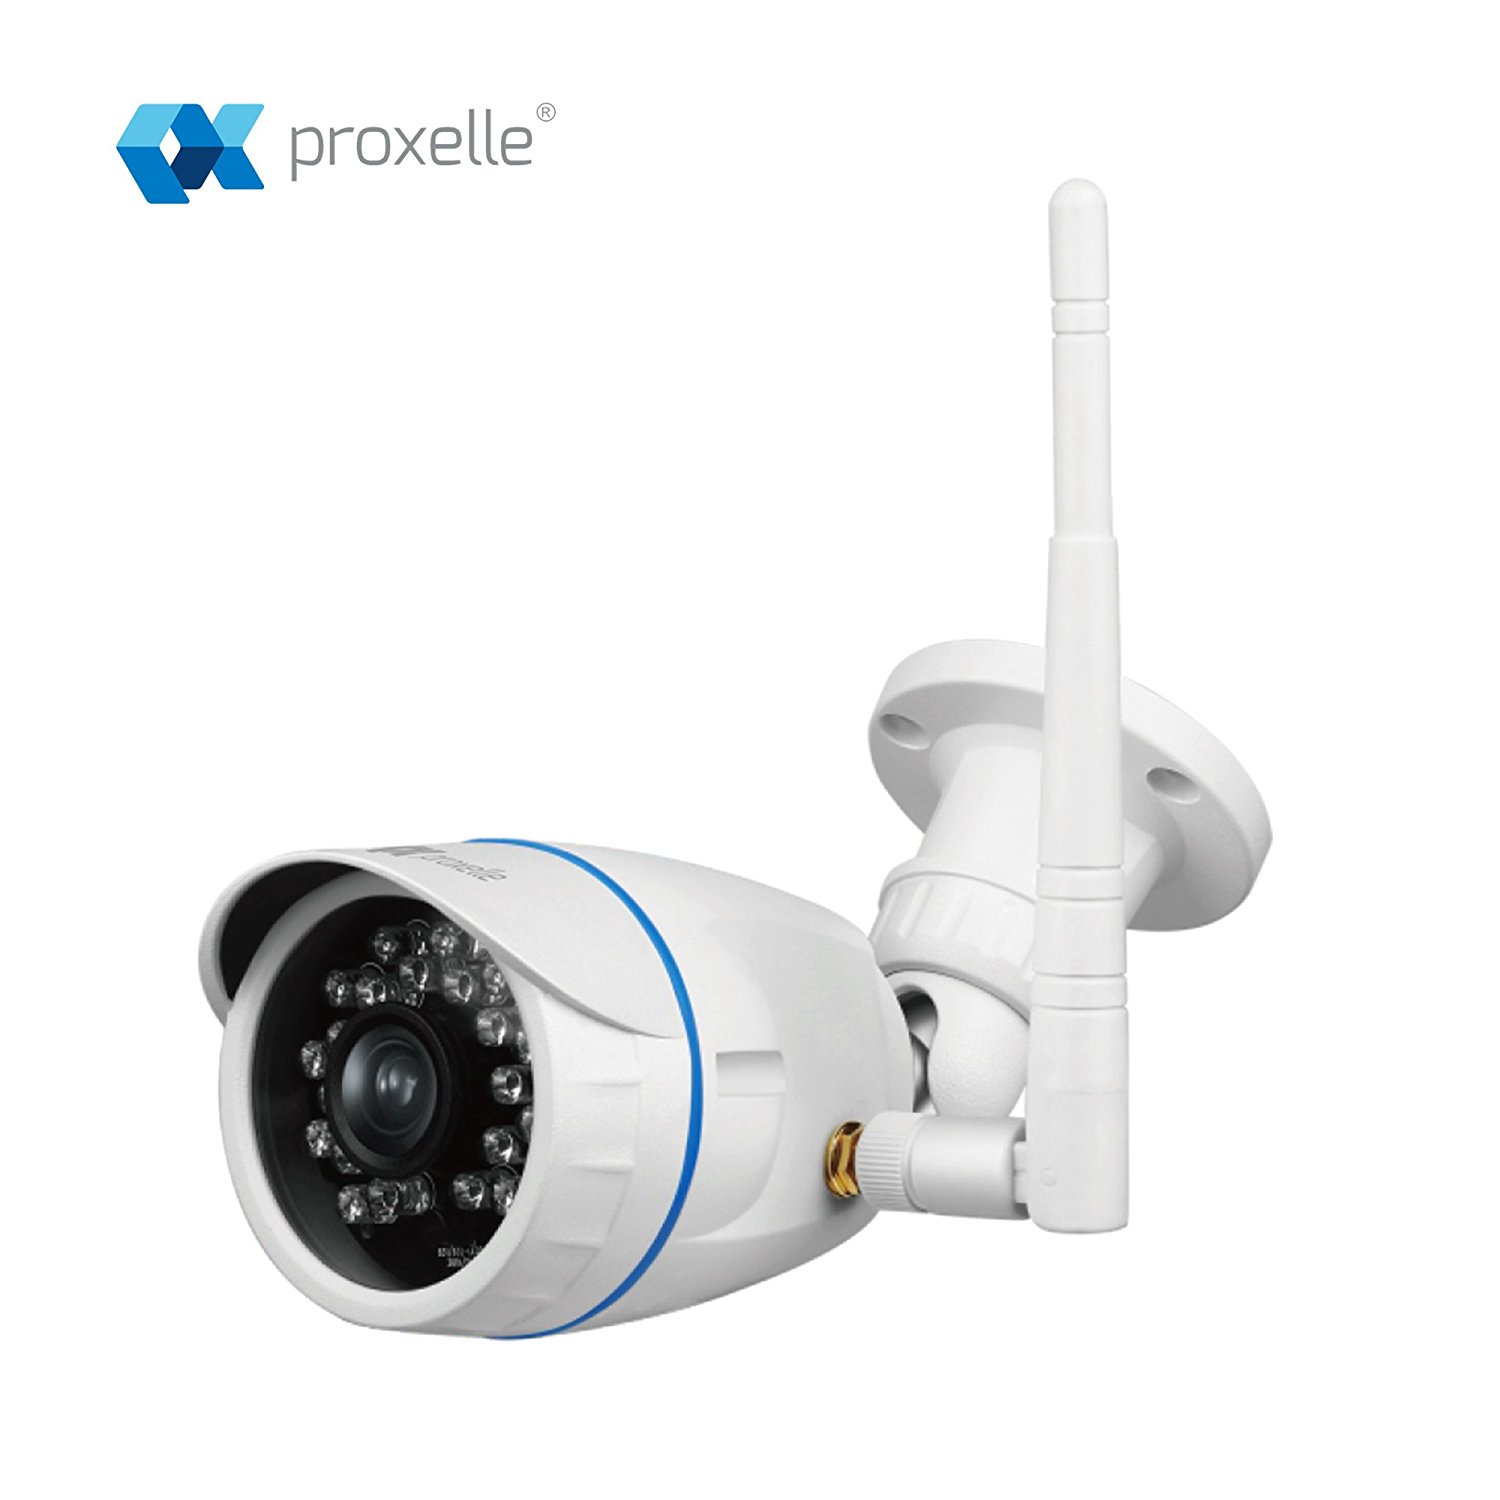 Amazon.com : ProxEye Smart WIFI Surveillance Camera - HD Video With ...